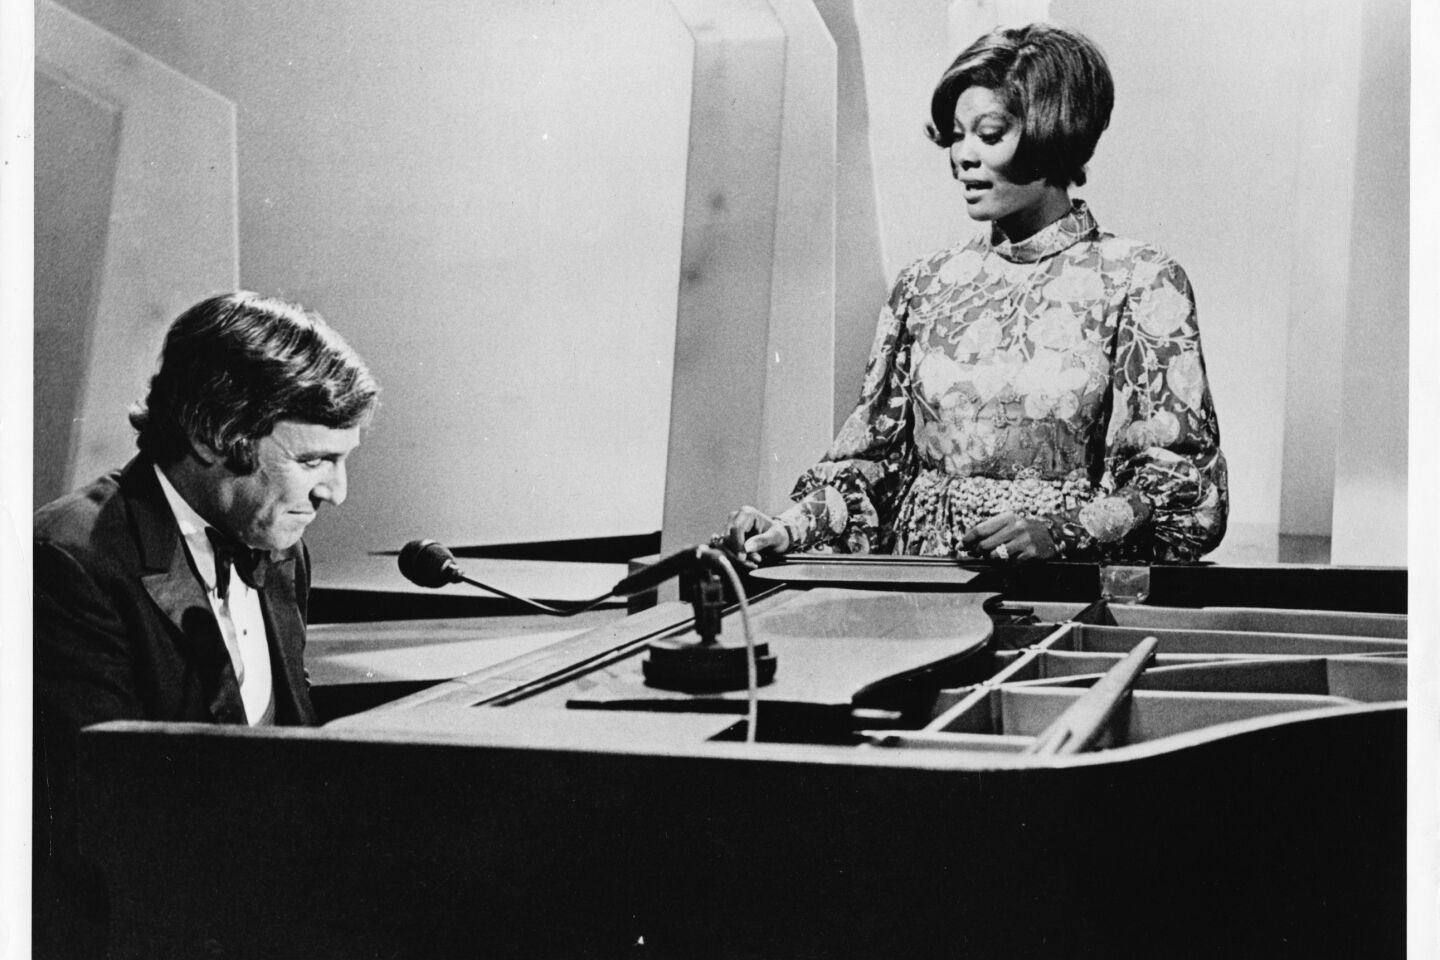 Burt Bacharach plays piano as Dionne Warwick sings